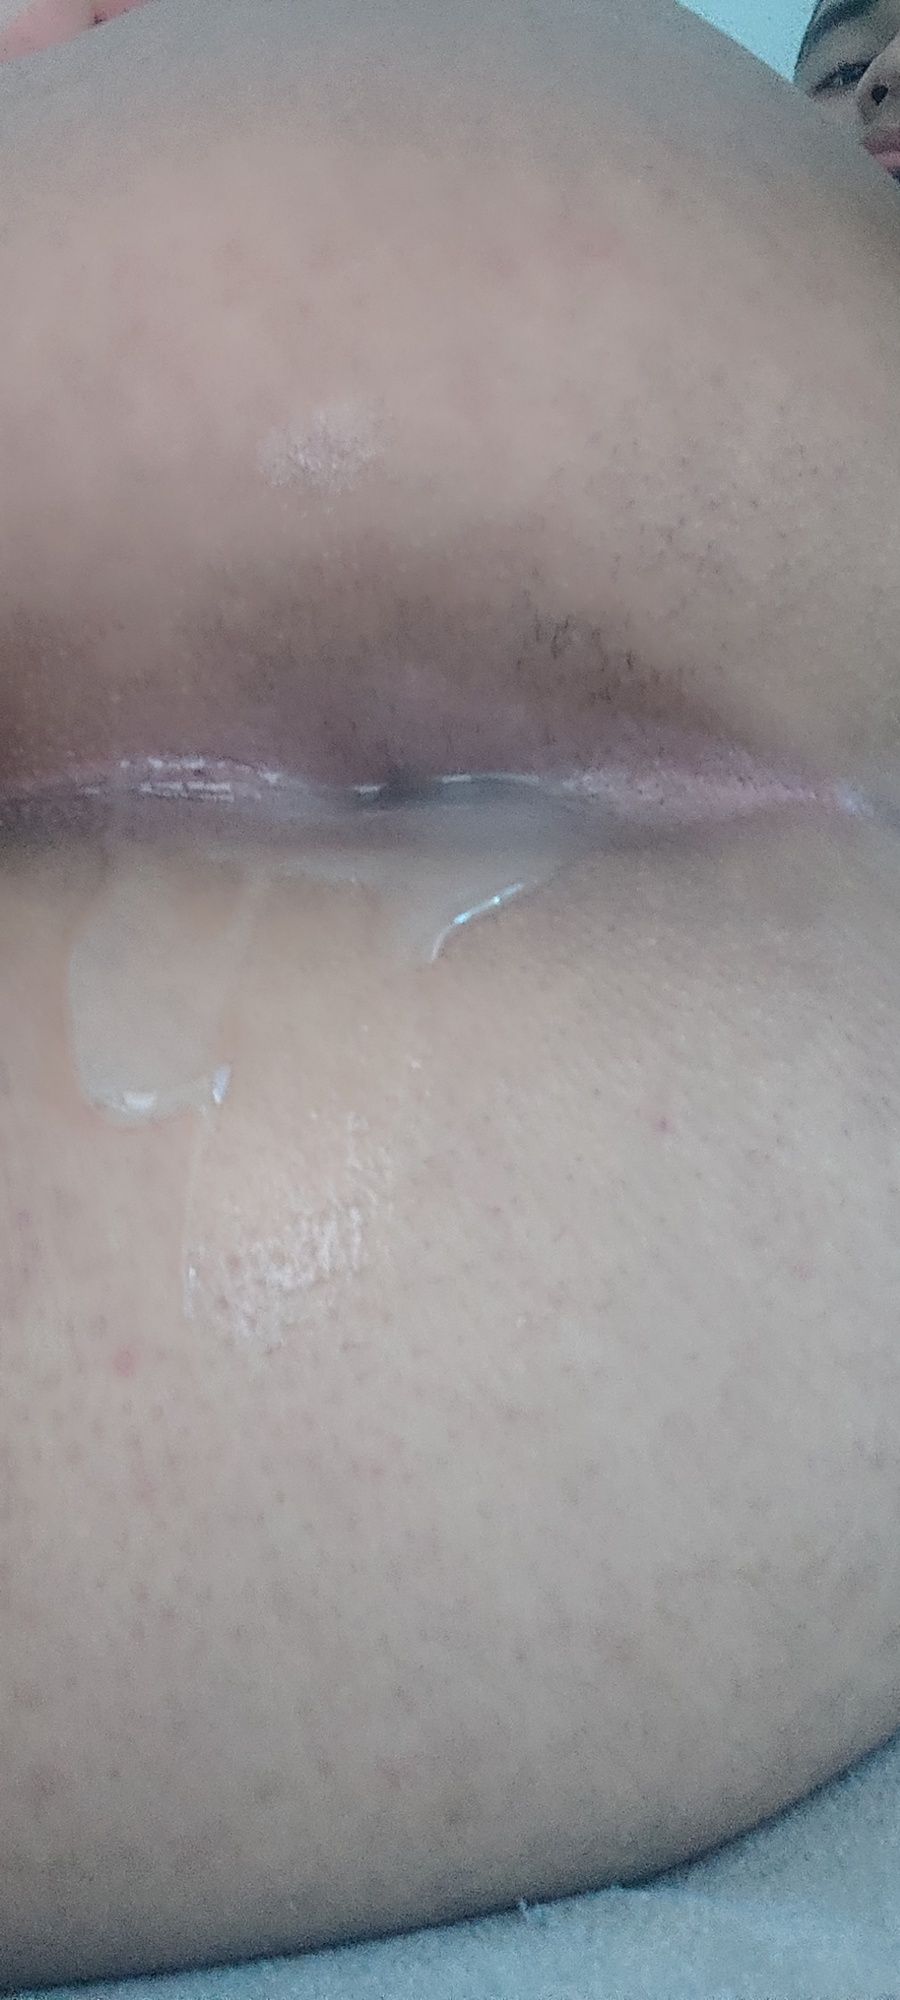 My tight Virgin femboy hole dripping cum #8